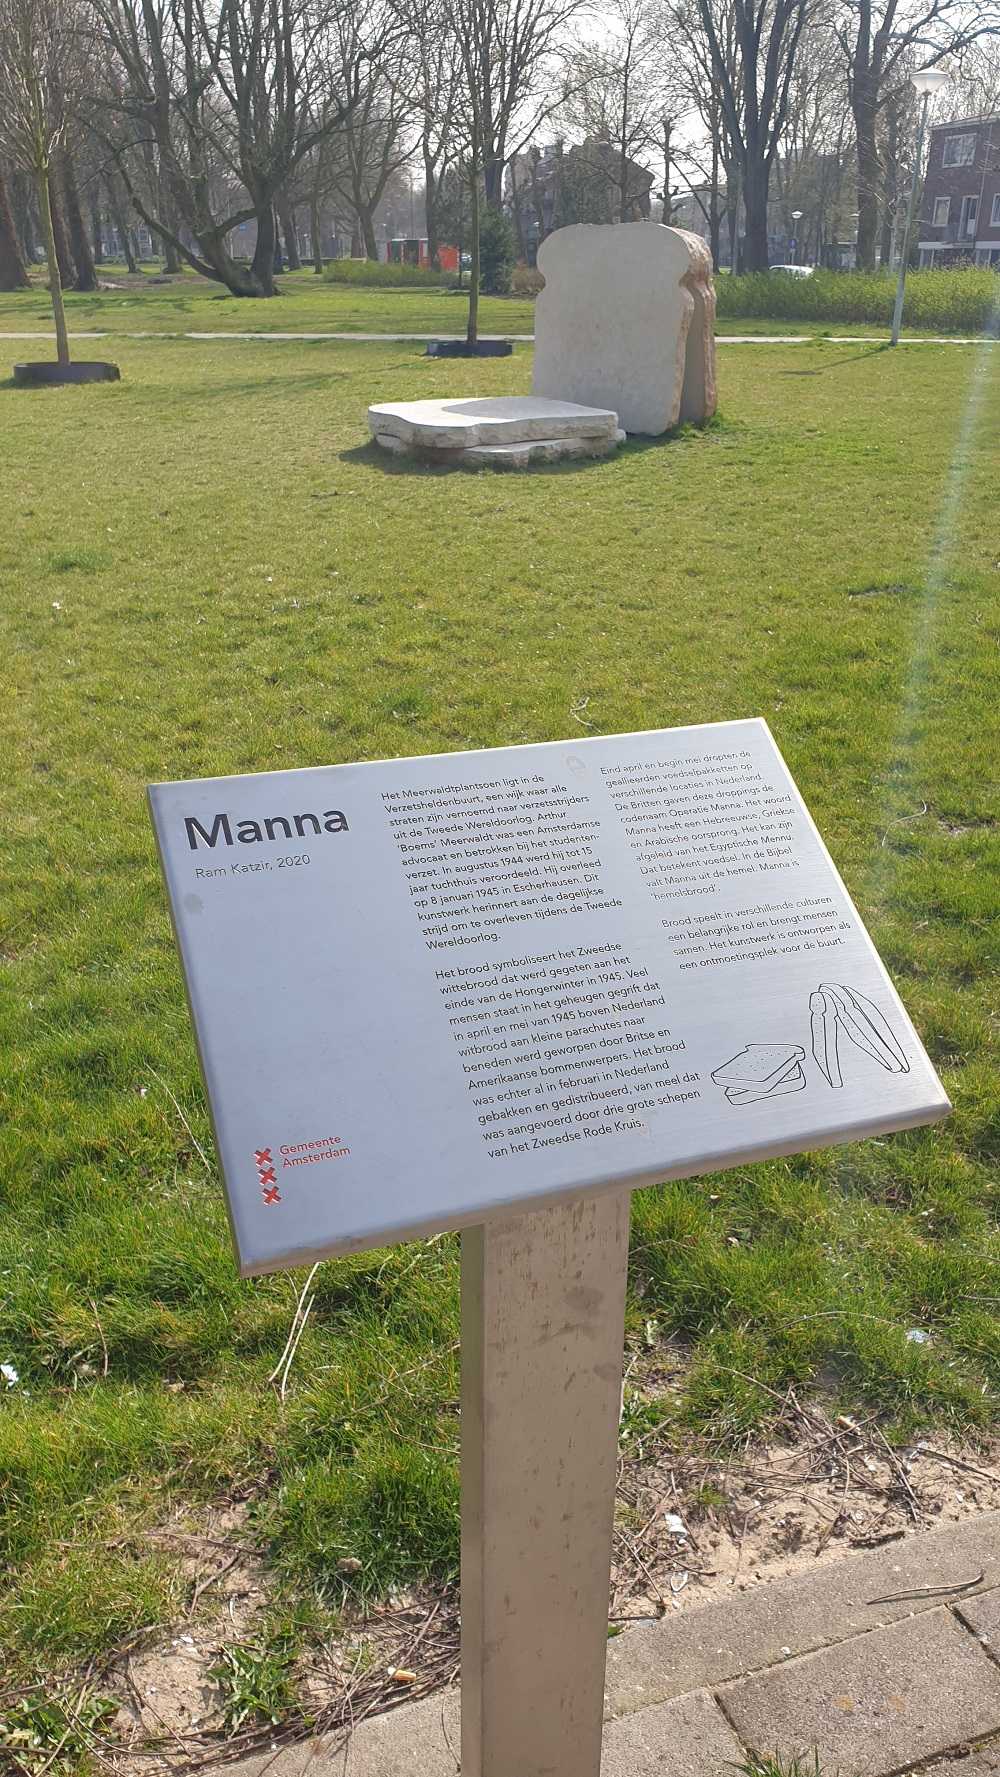 Manna Monument Meerwaldtplantsoen Amsterdam #4